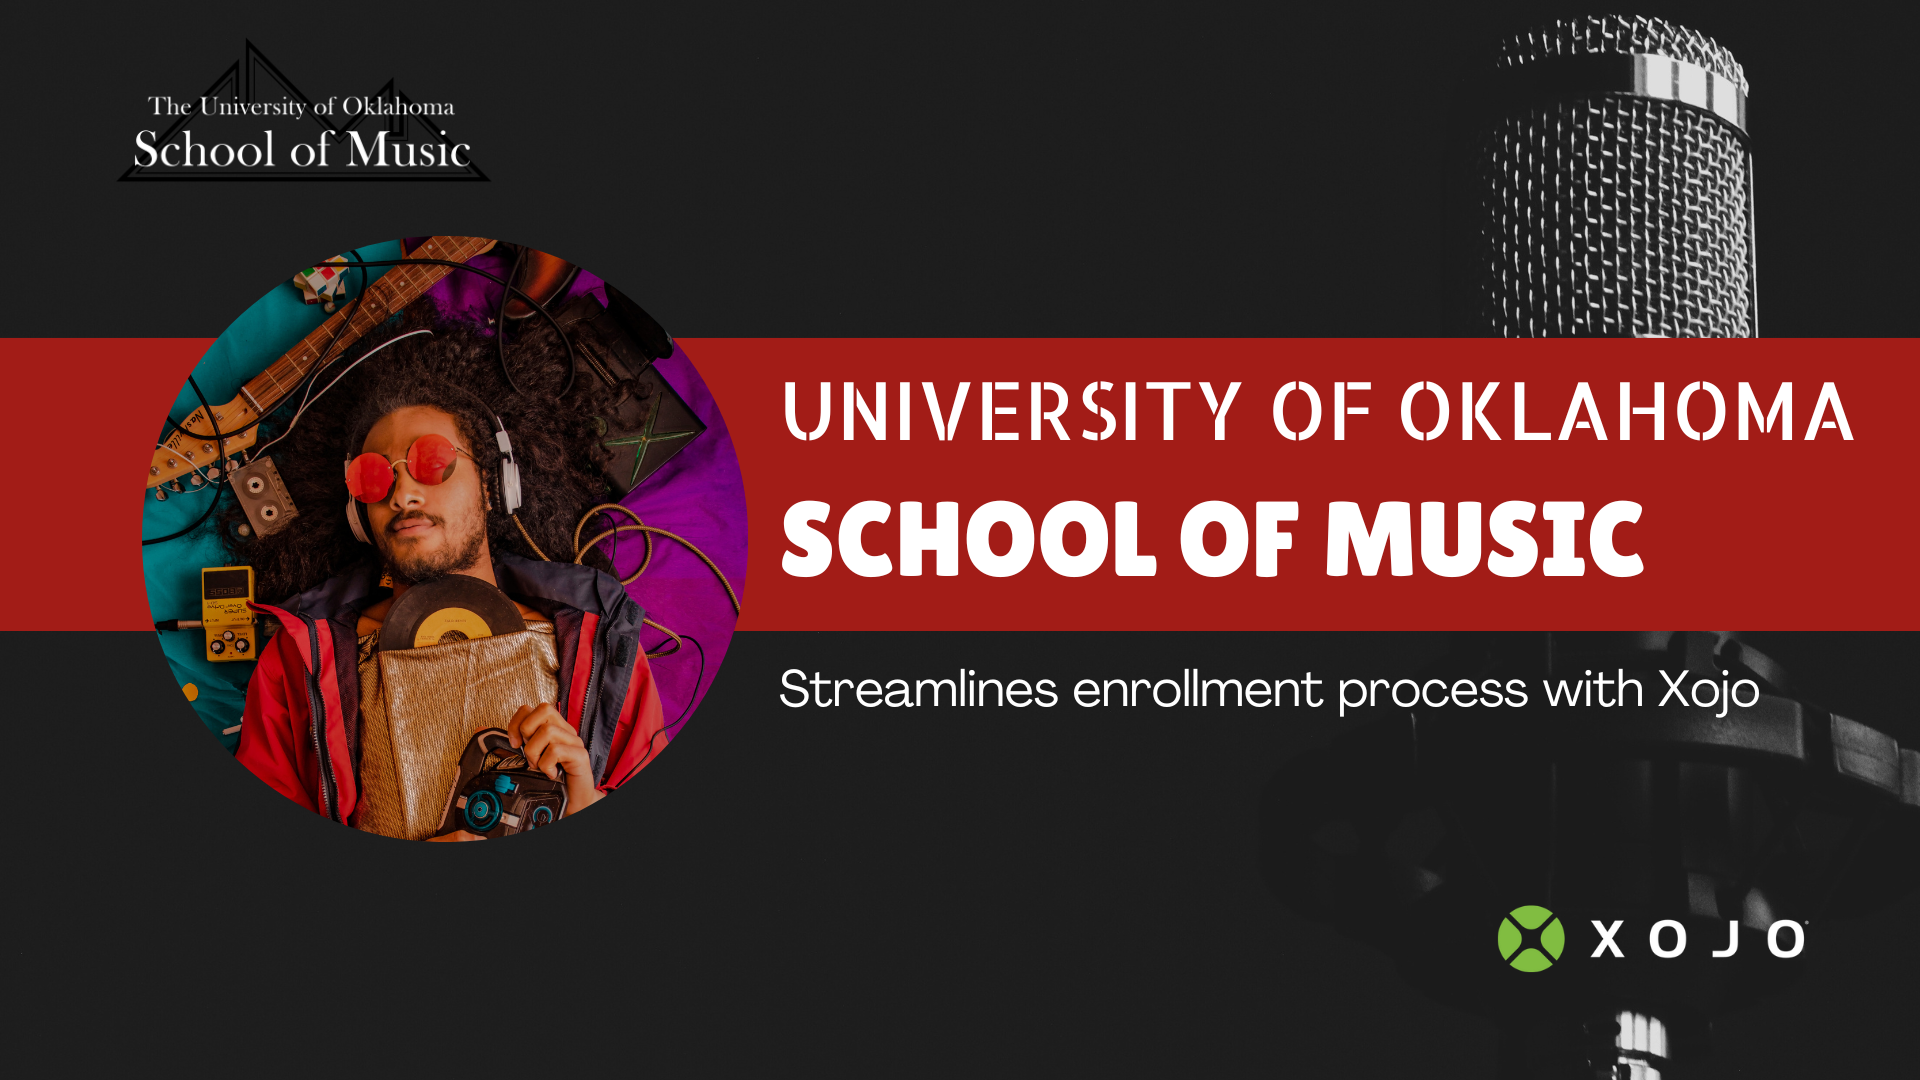 OU School of Music